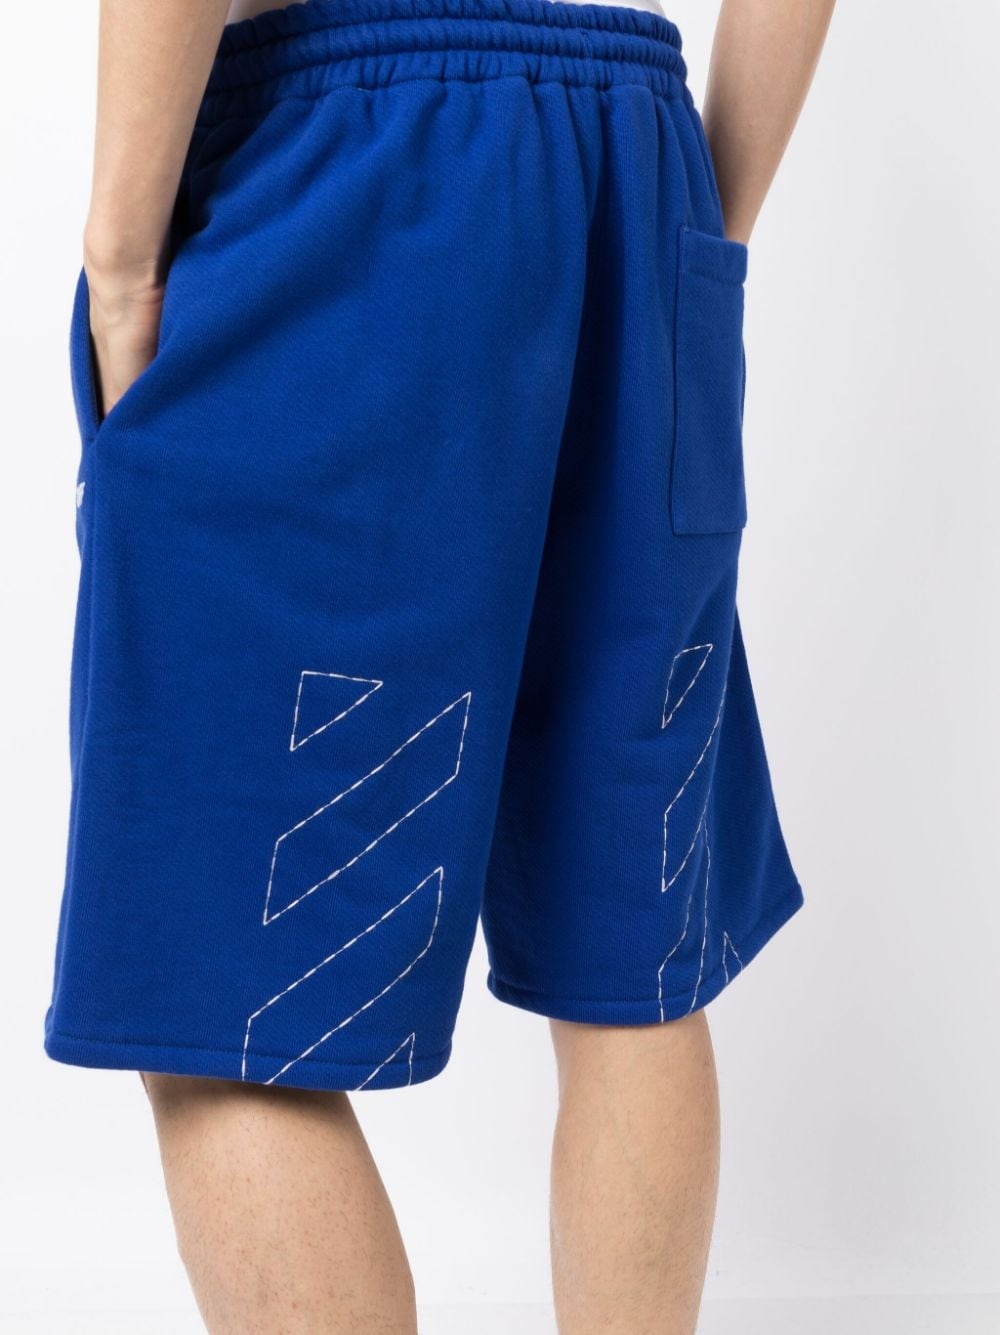 Stitch Diag cotton track shorts - 5